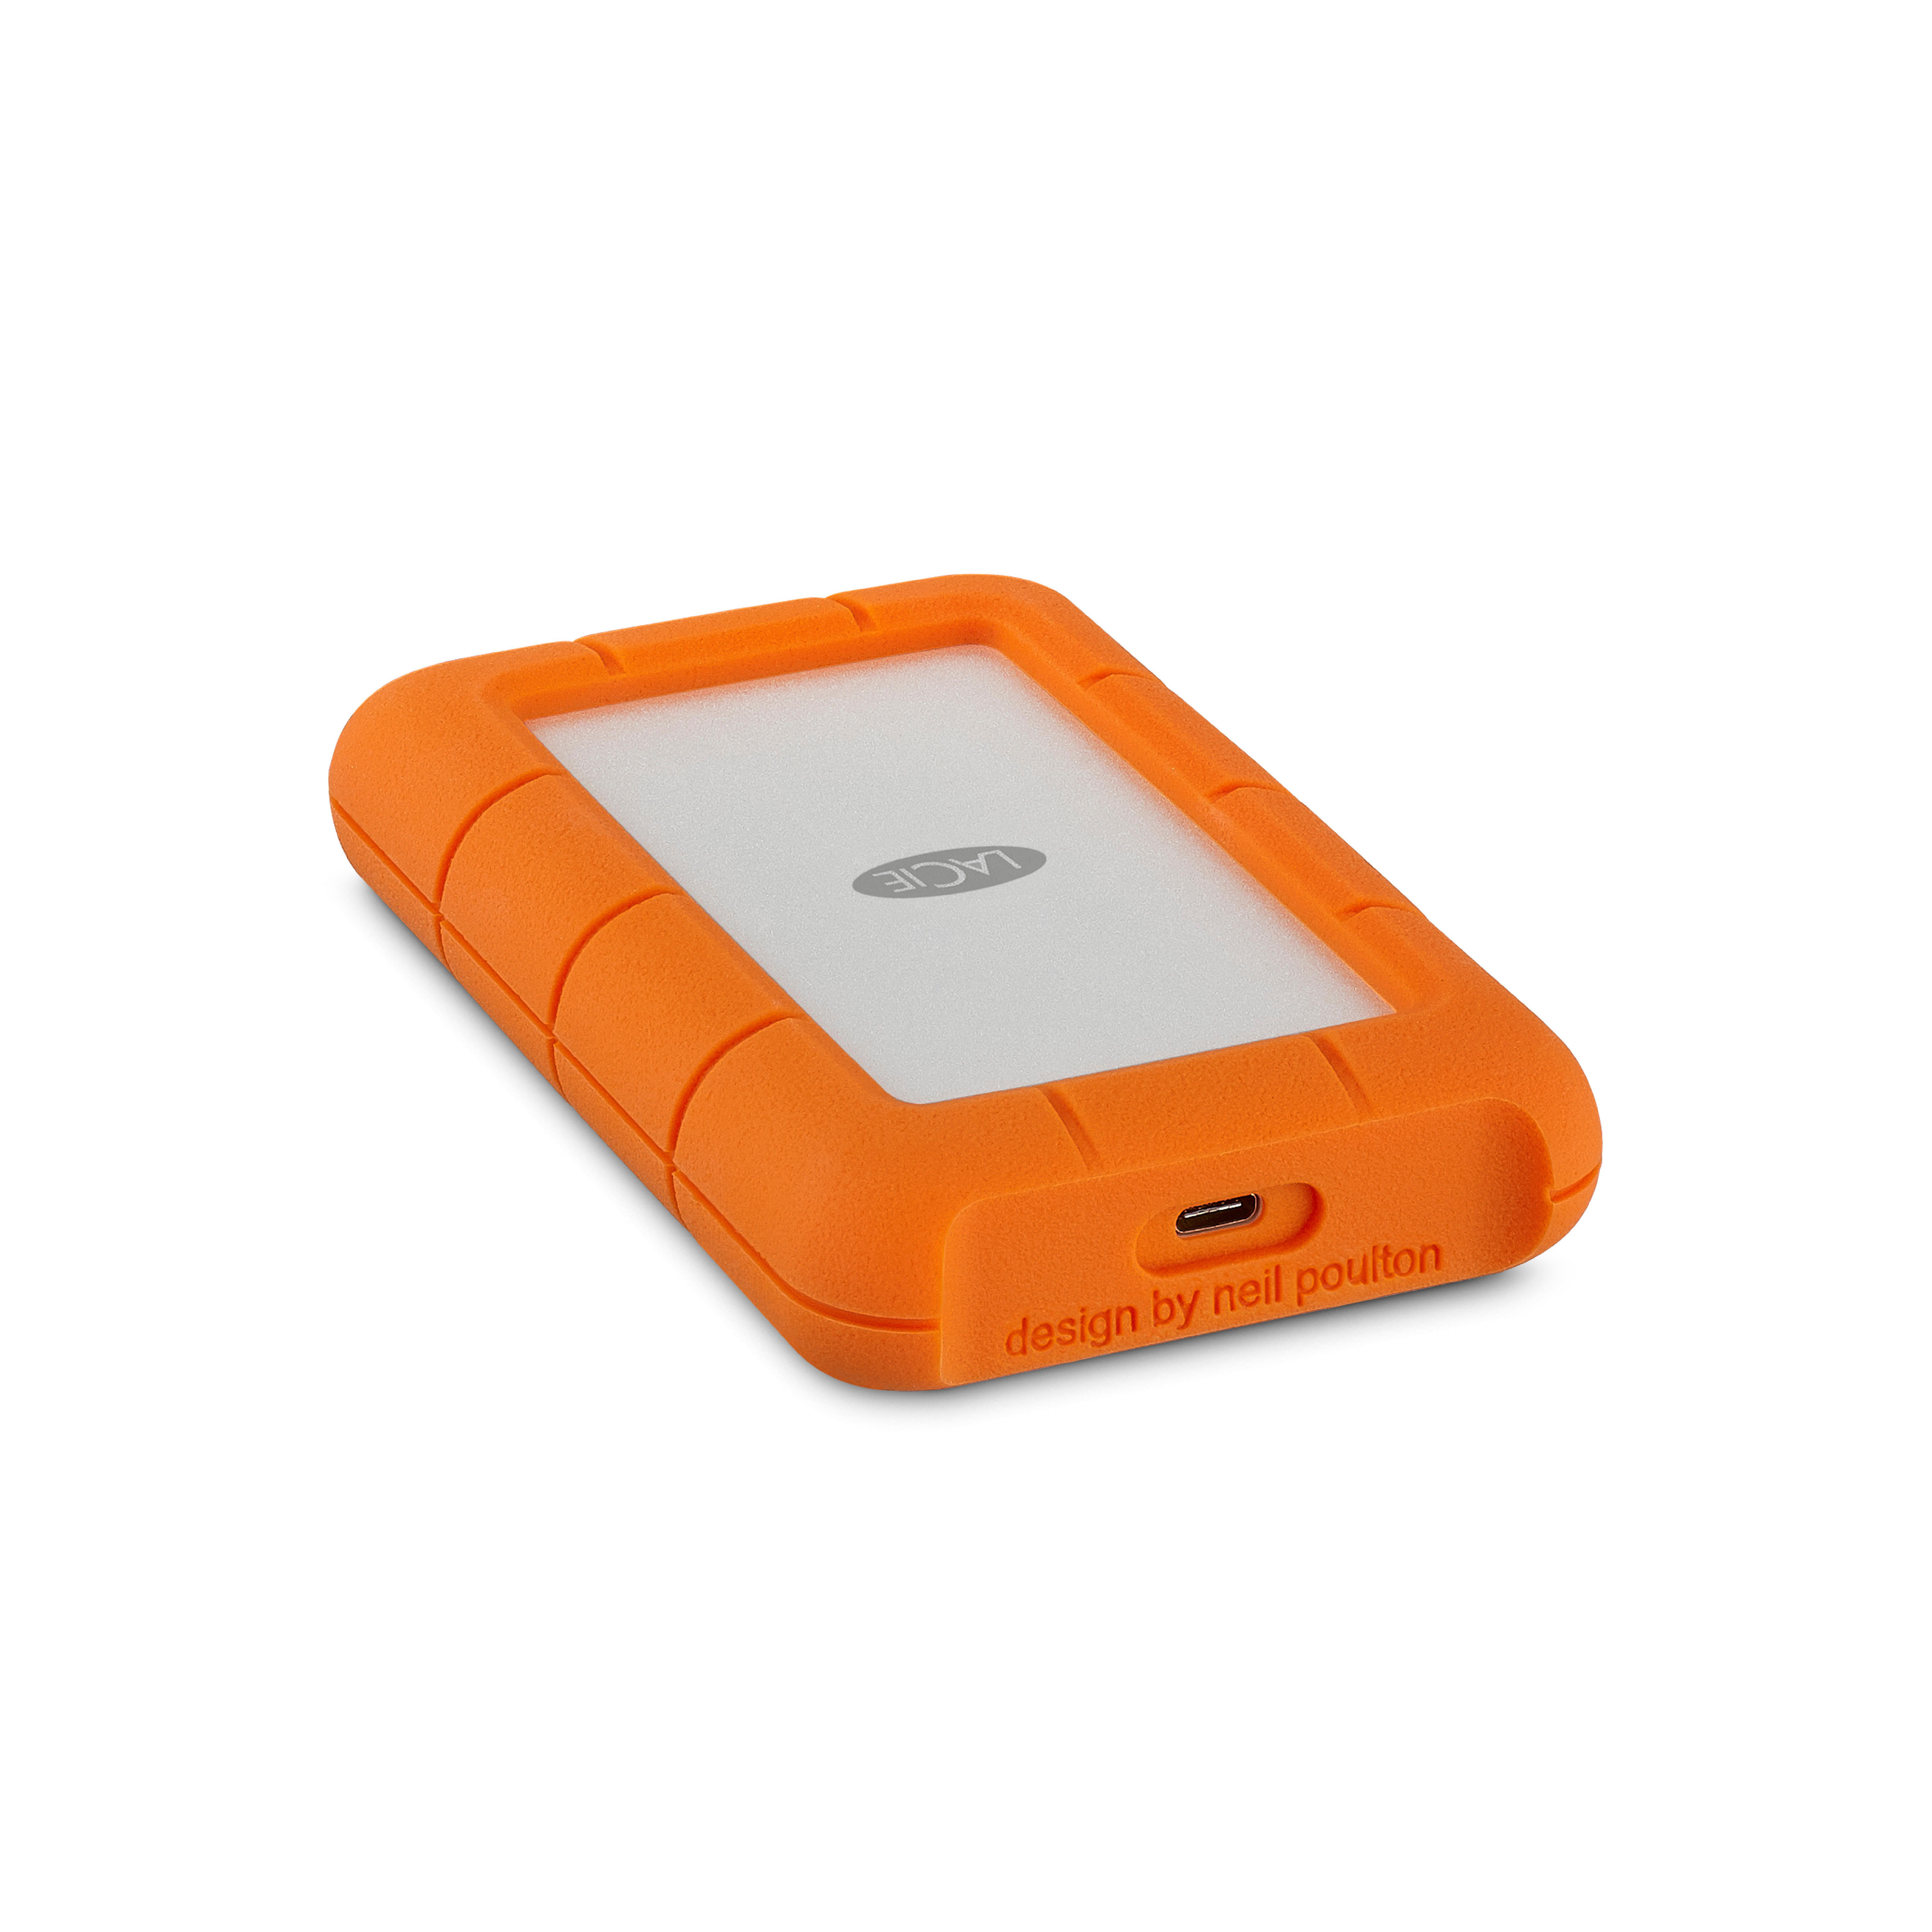 LACIE Rugged 5 Silber/Orange extern, 2,5 Festplatte, TB Zoll, USB-C HDD